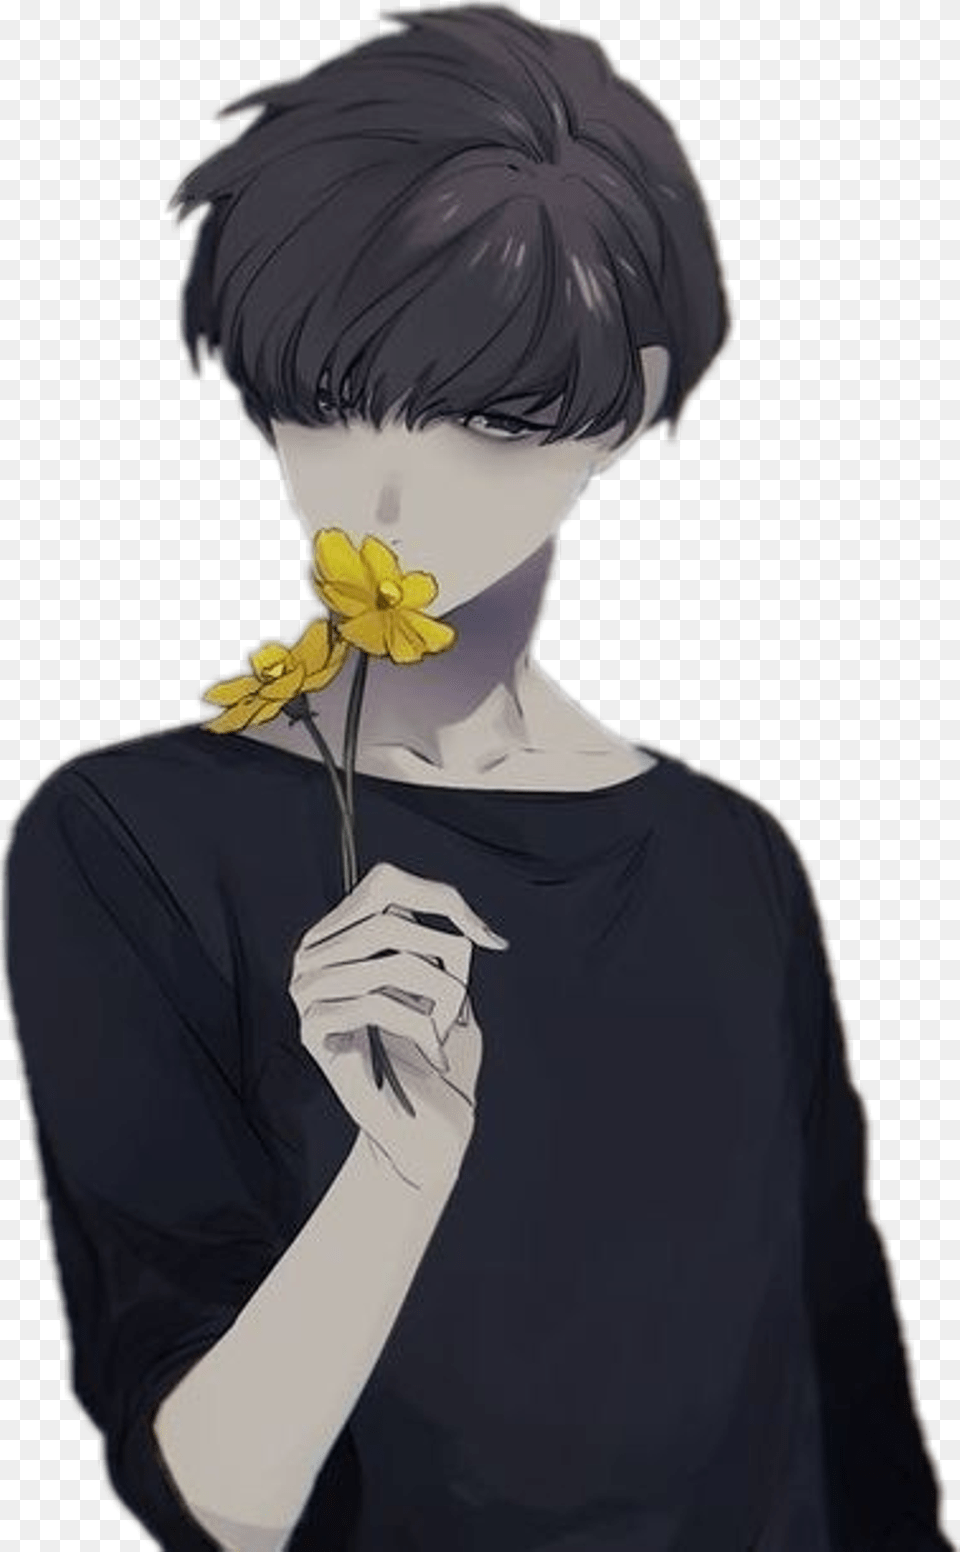 Anime Animeboy Animeboy Flower Yellow Sad Boy Guro, Adult, Person, Man, Male Png